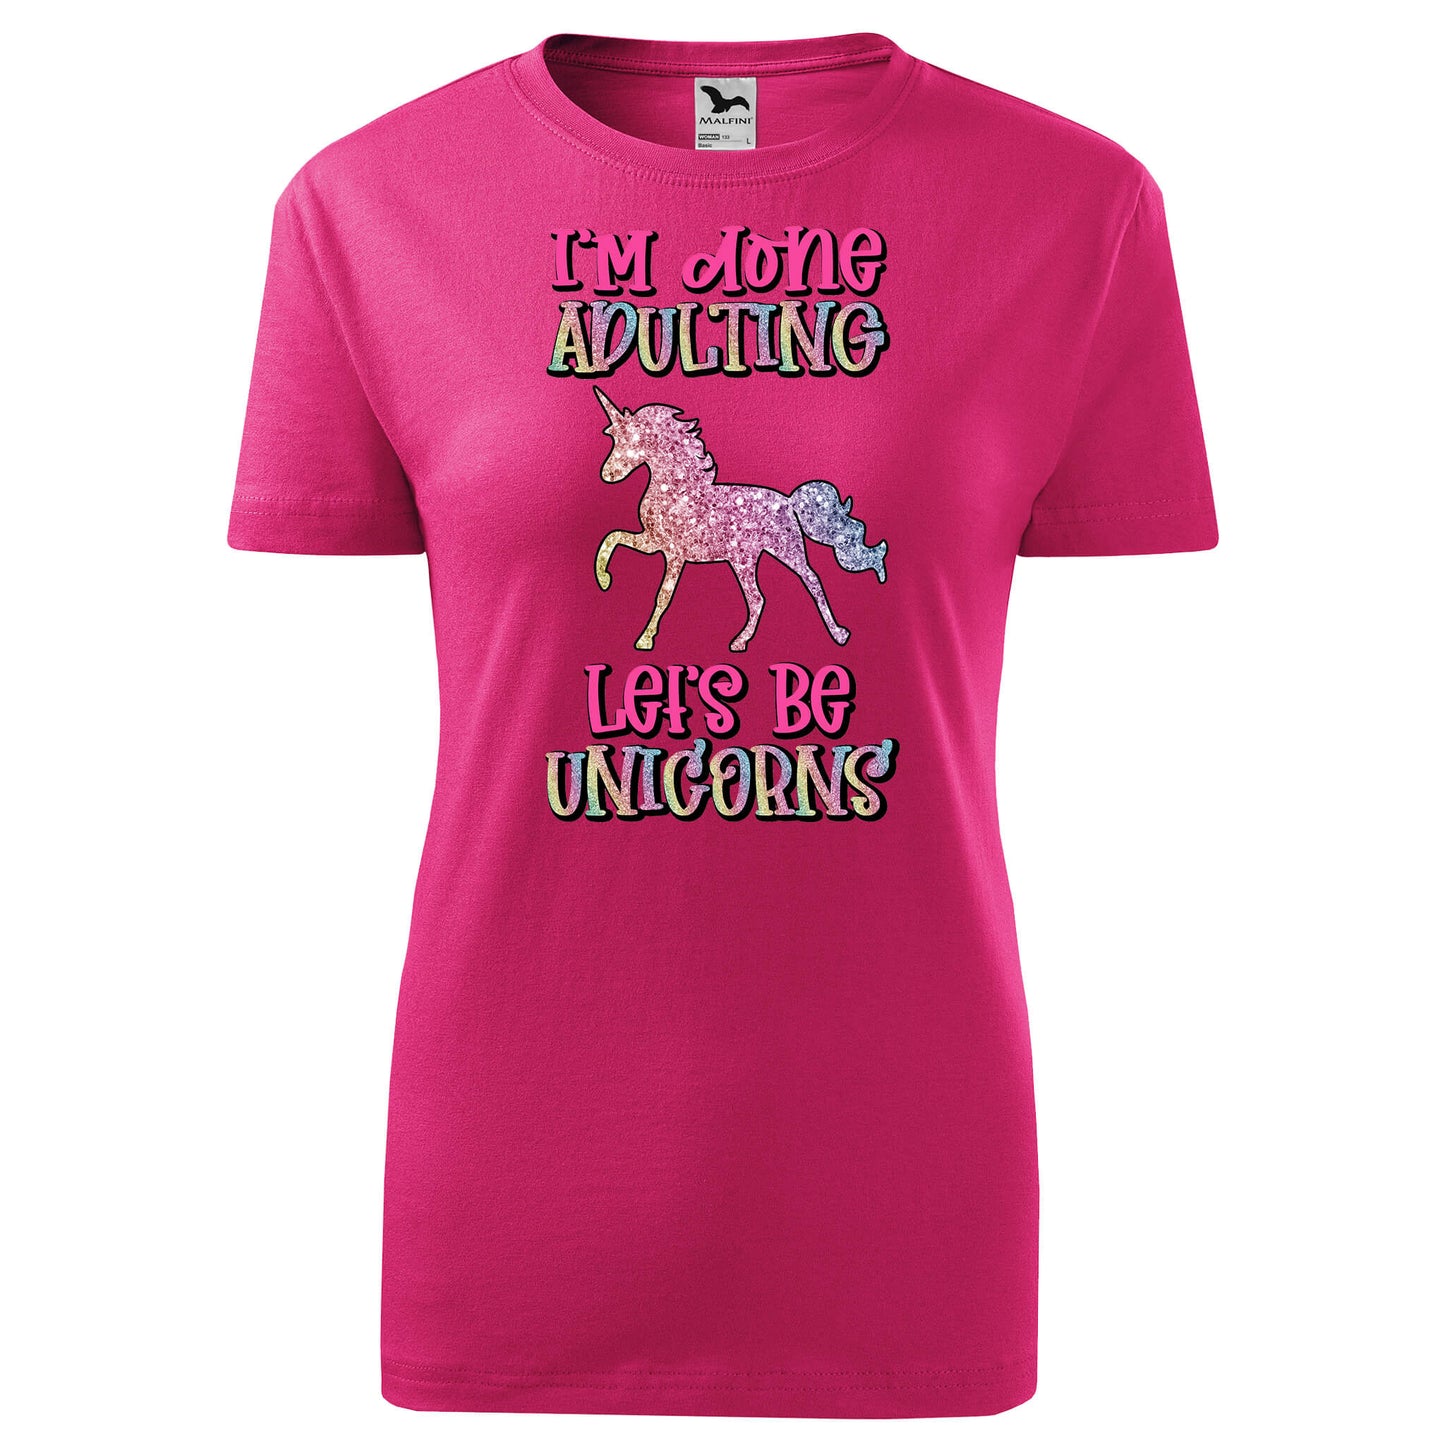 Im done adulting lets be unicorns t-shirt - rvdesignprint